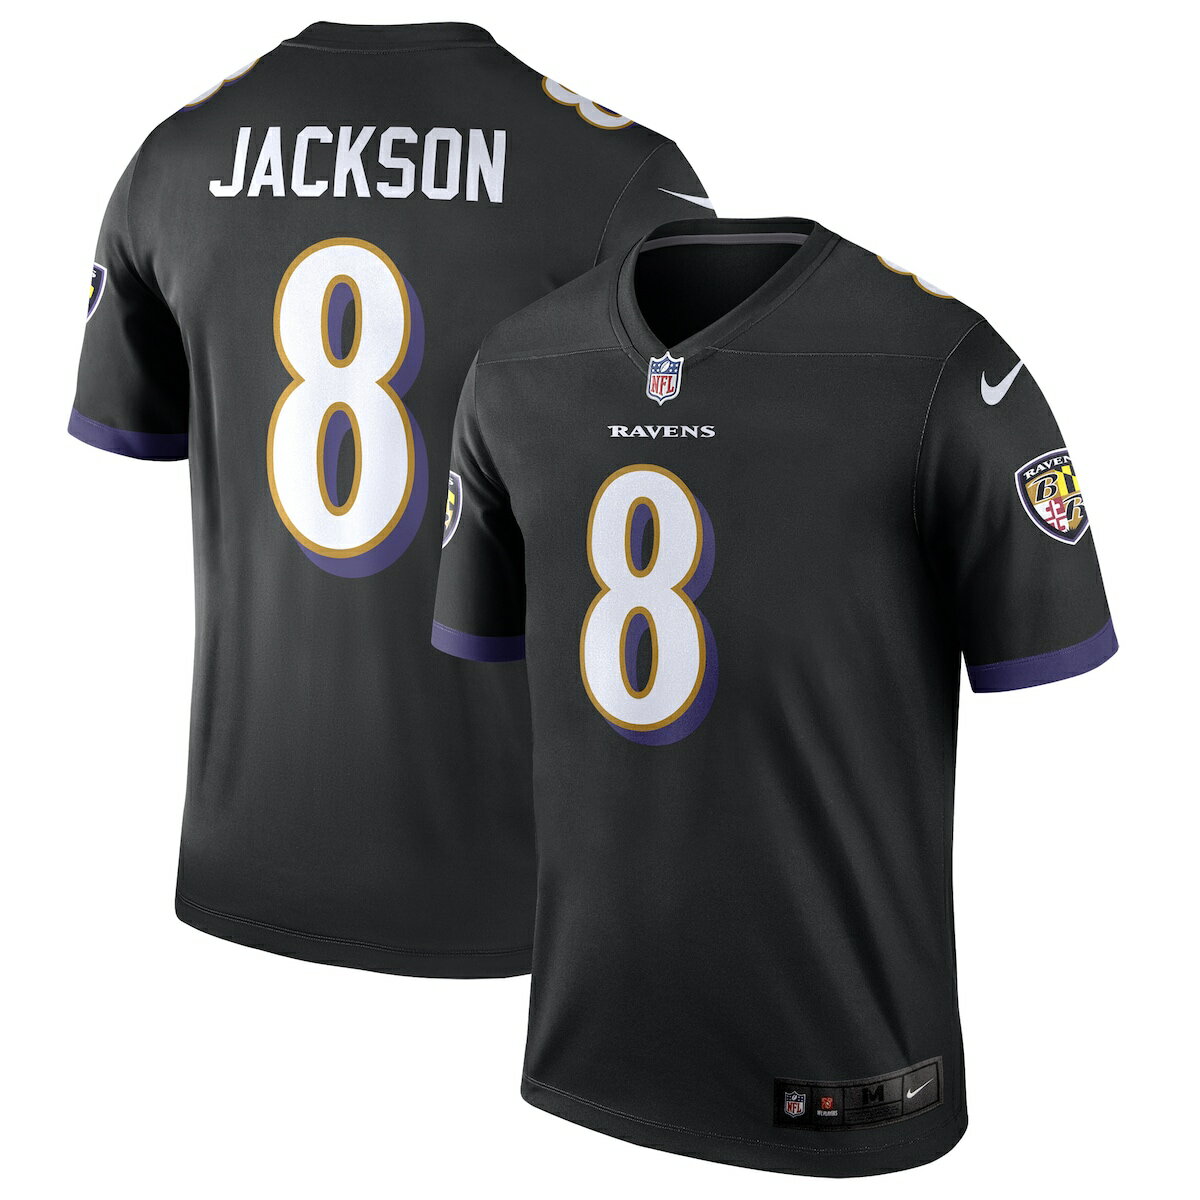 NFL レイブンズ ラマー・ジャクソン ユニフォーム Nike ナイキ メンズ ブラック (Men's Nike Legend Jersey)